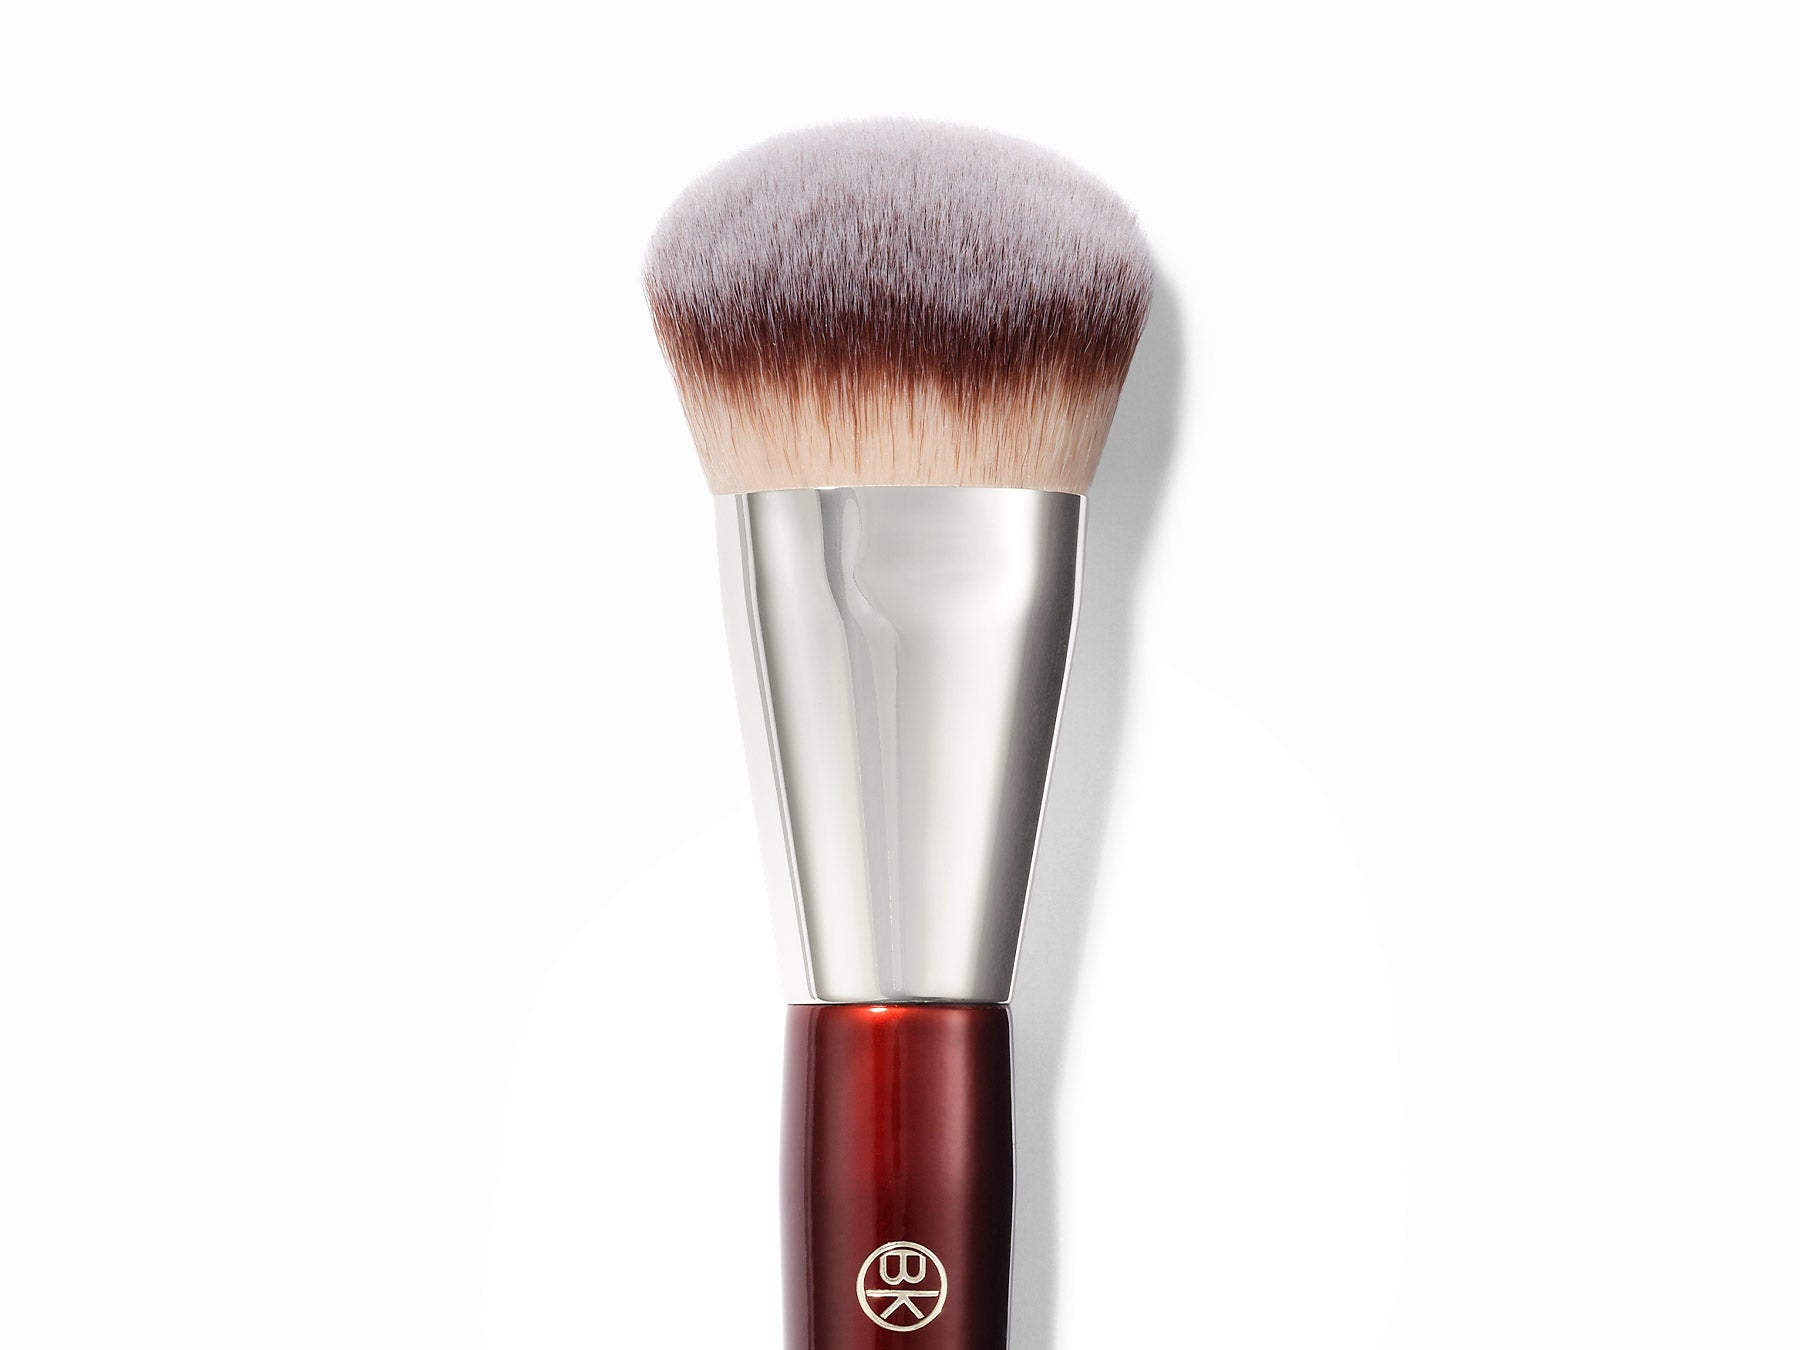 Make up Brush Holder - Brilliant Promos - Be Brilliant!